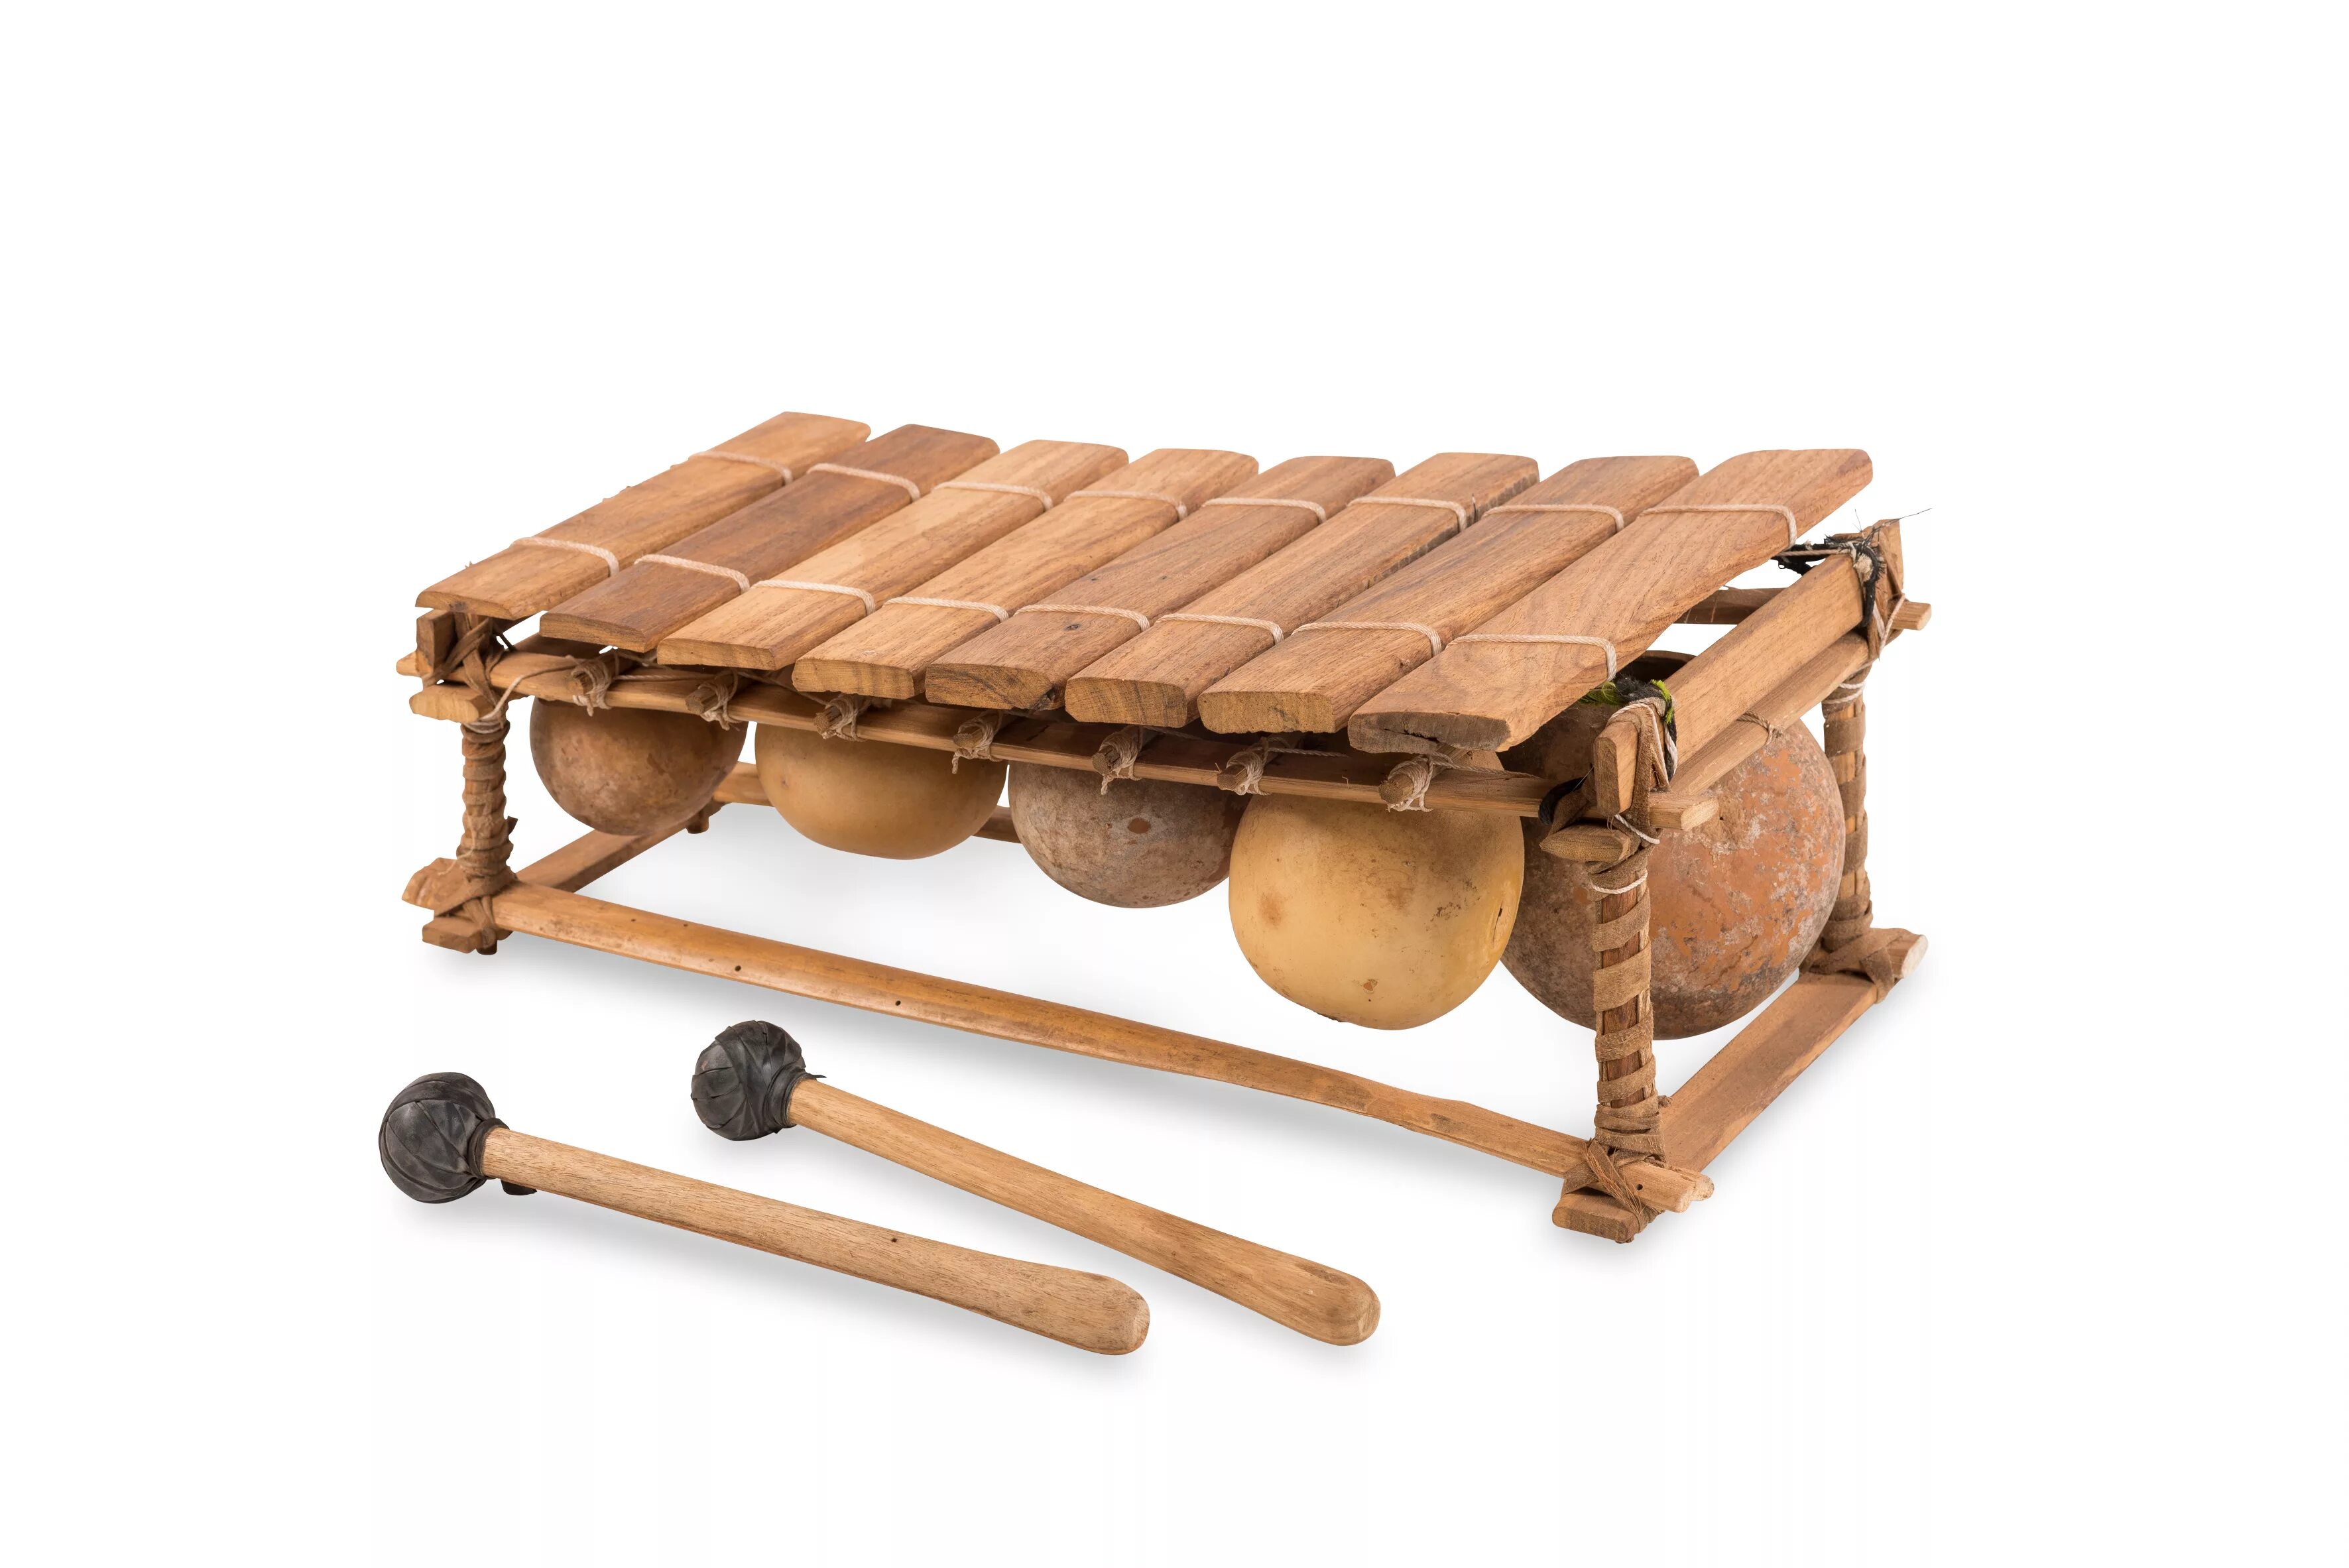 Дрова музыкальный инструмент. Балафон ударный музыкальный инструмент. Маримба музыкальный инструмент древний. Африканский балафон. Музыкальные инструменты Африки балафон.